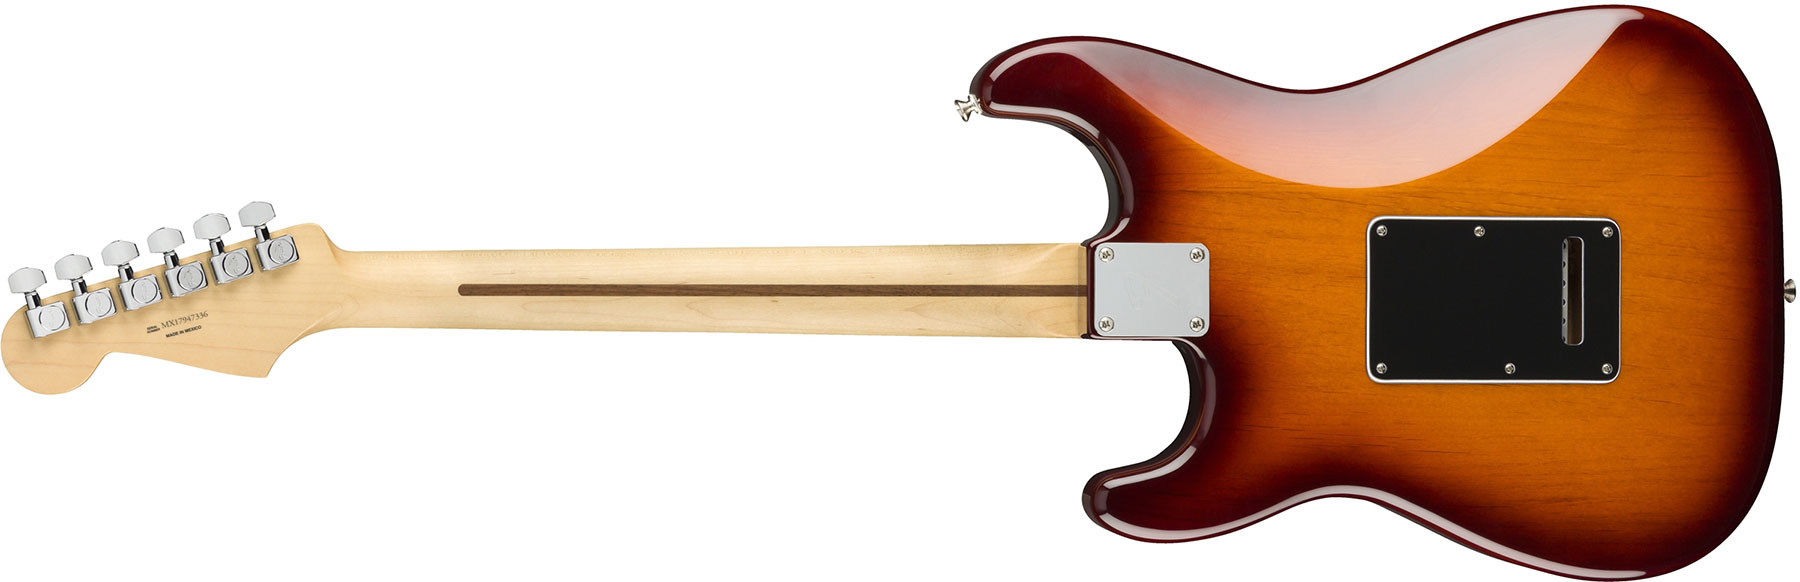 Fender Strat Player Plus Top Mex Hss Pf - Tobacco Burst - Str shape electric guitar - Variation 1